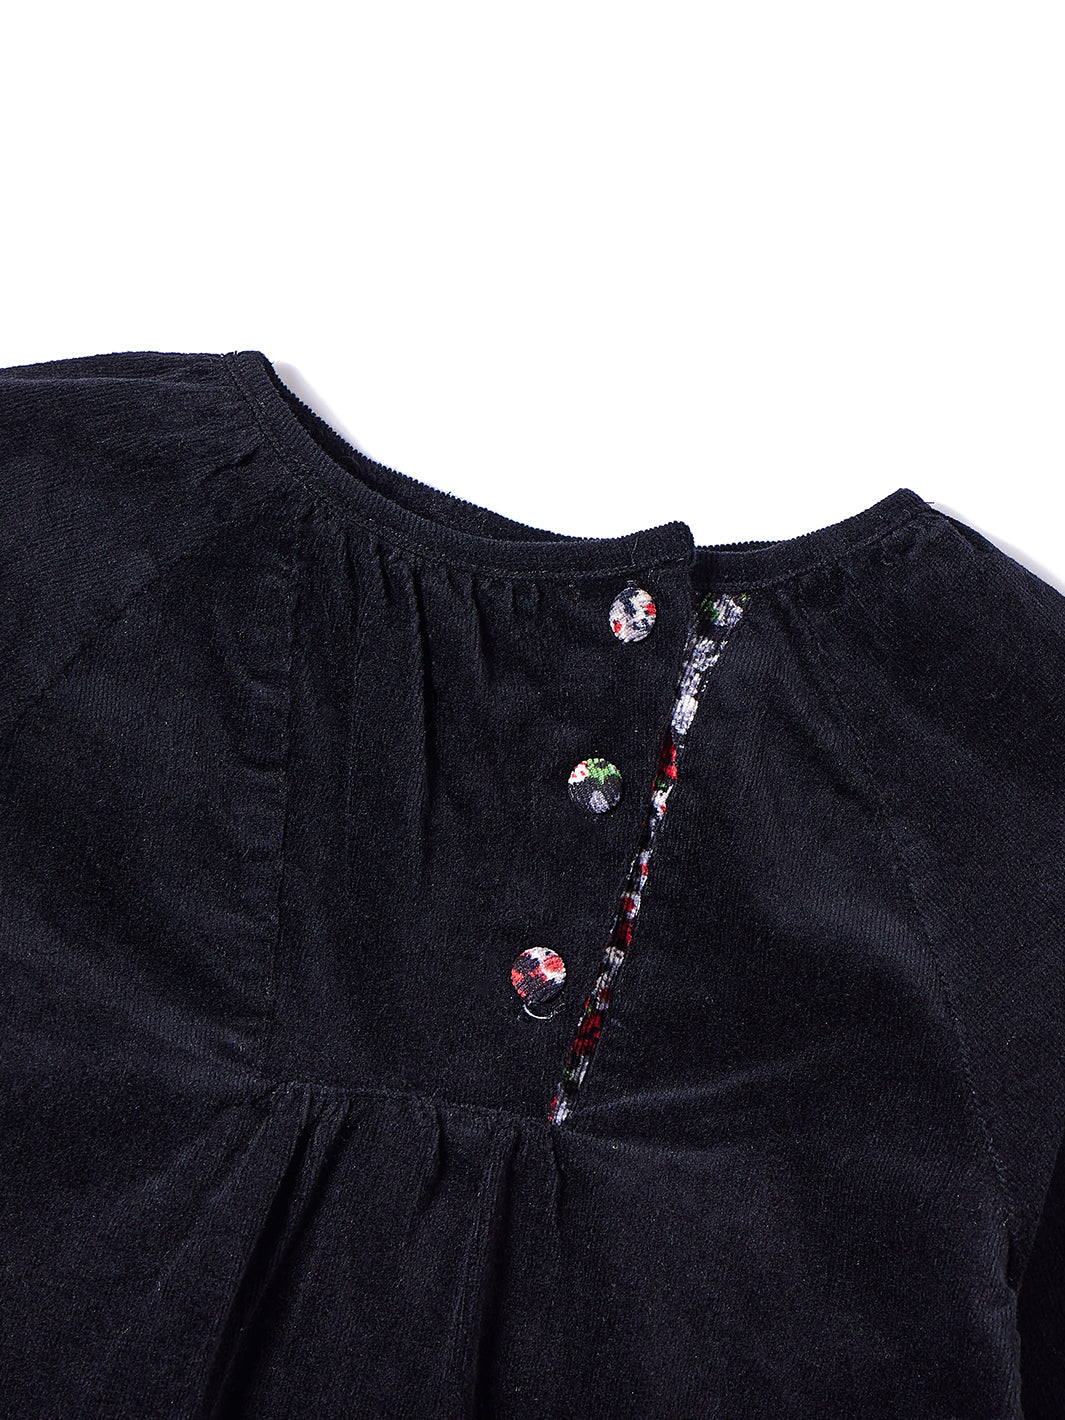 Floral Buttons Corduroy Bib Dress - Black